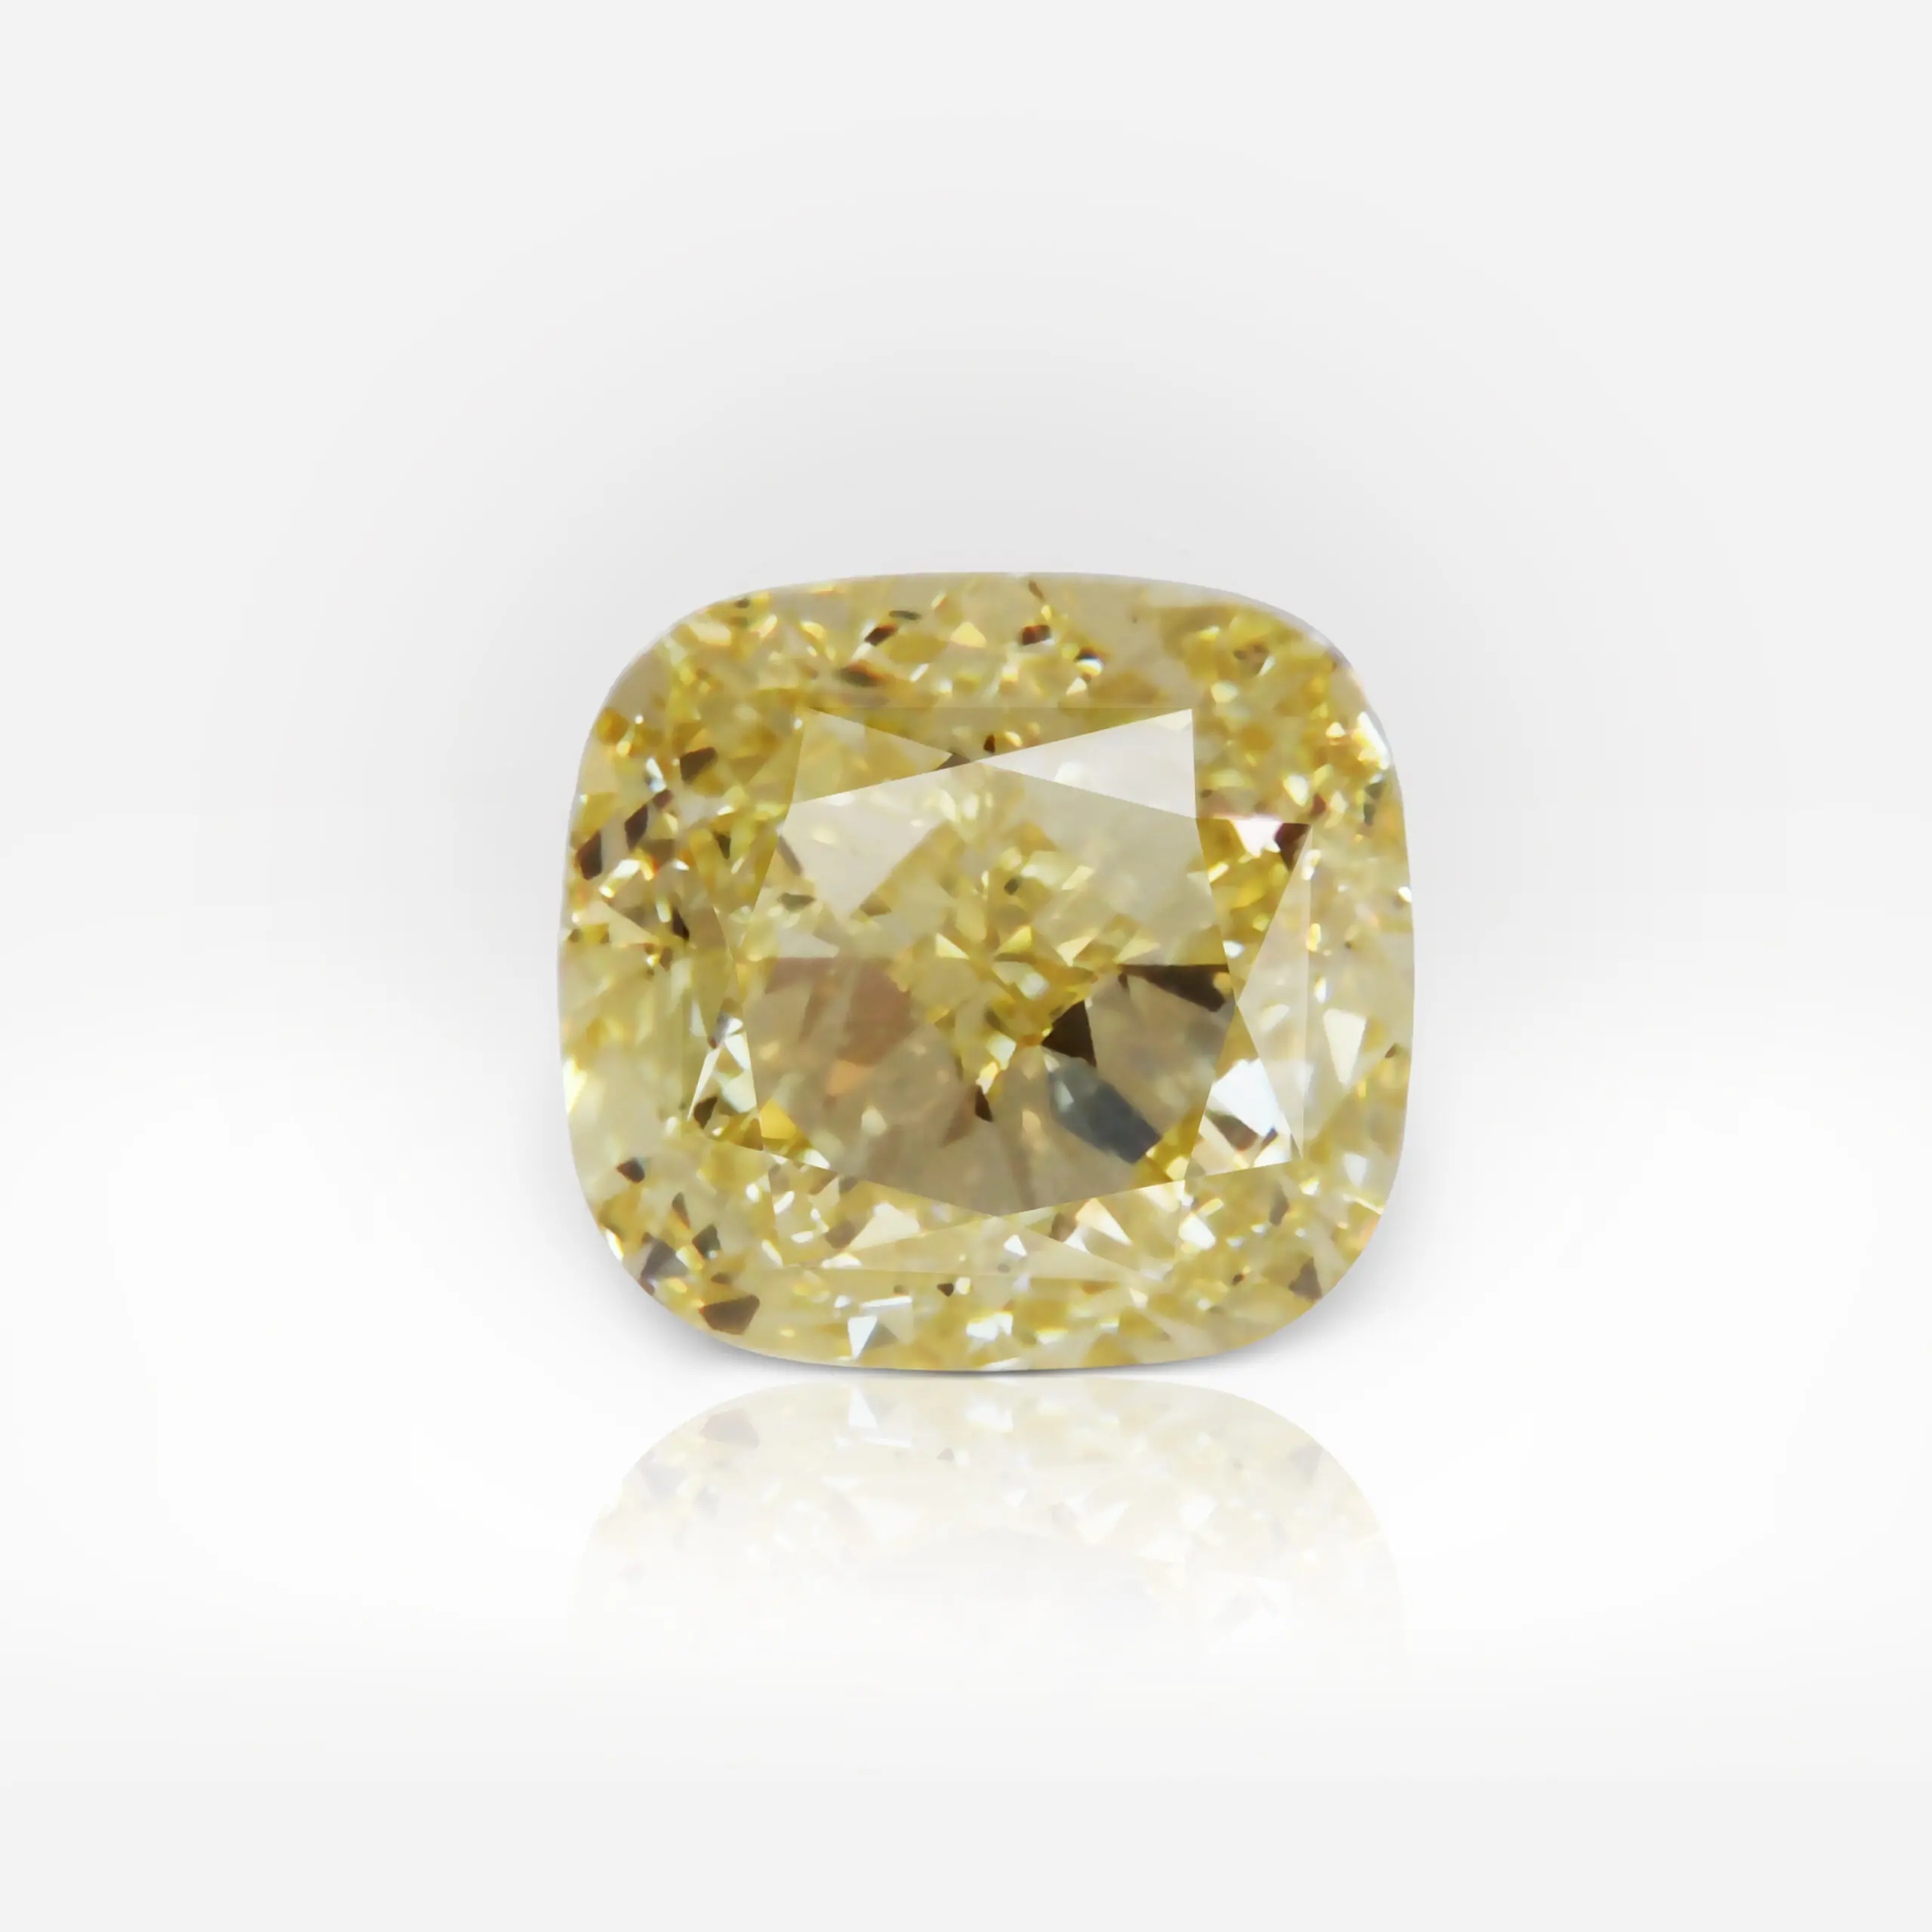 1.01 carat Fancy Yellow VVS2 Cushion Shape Diamond GIA - picture 1